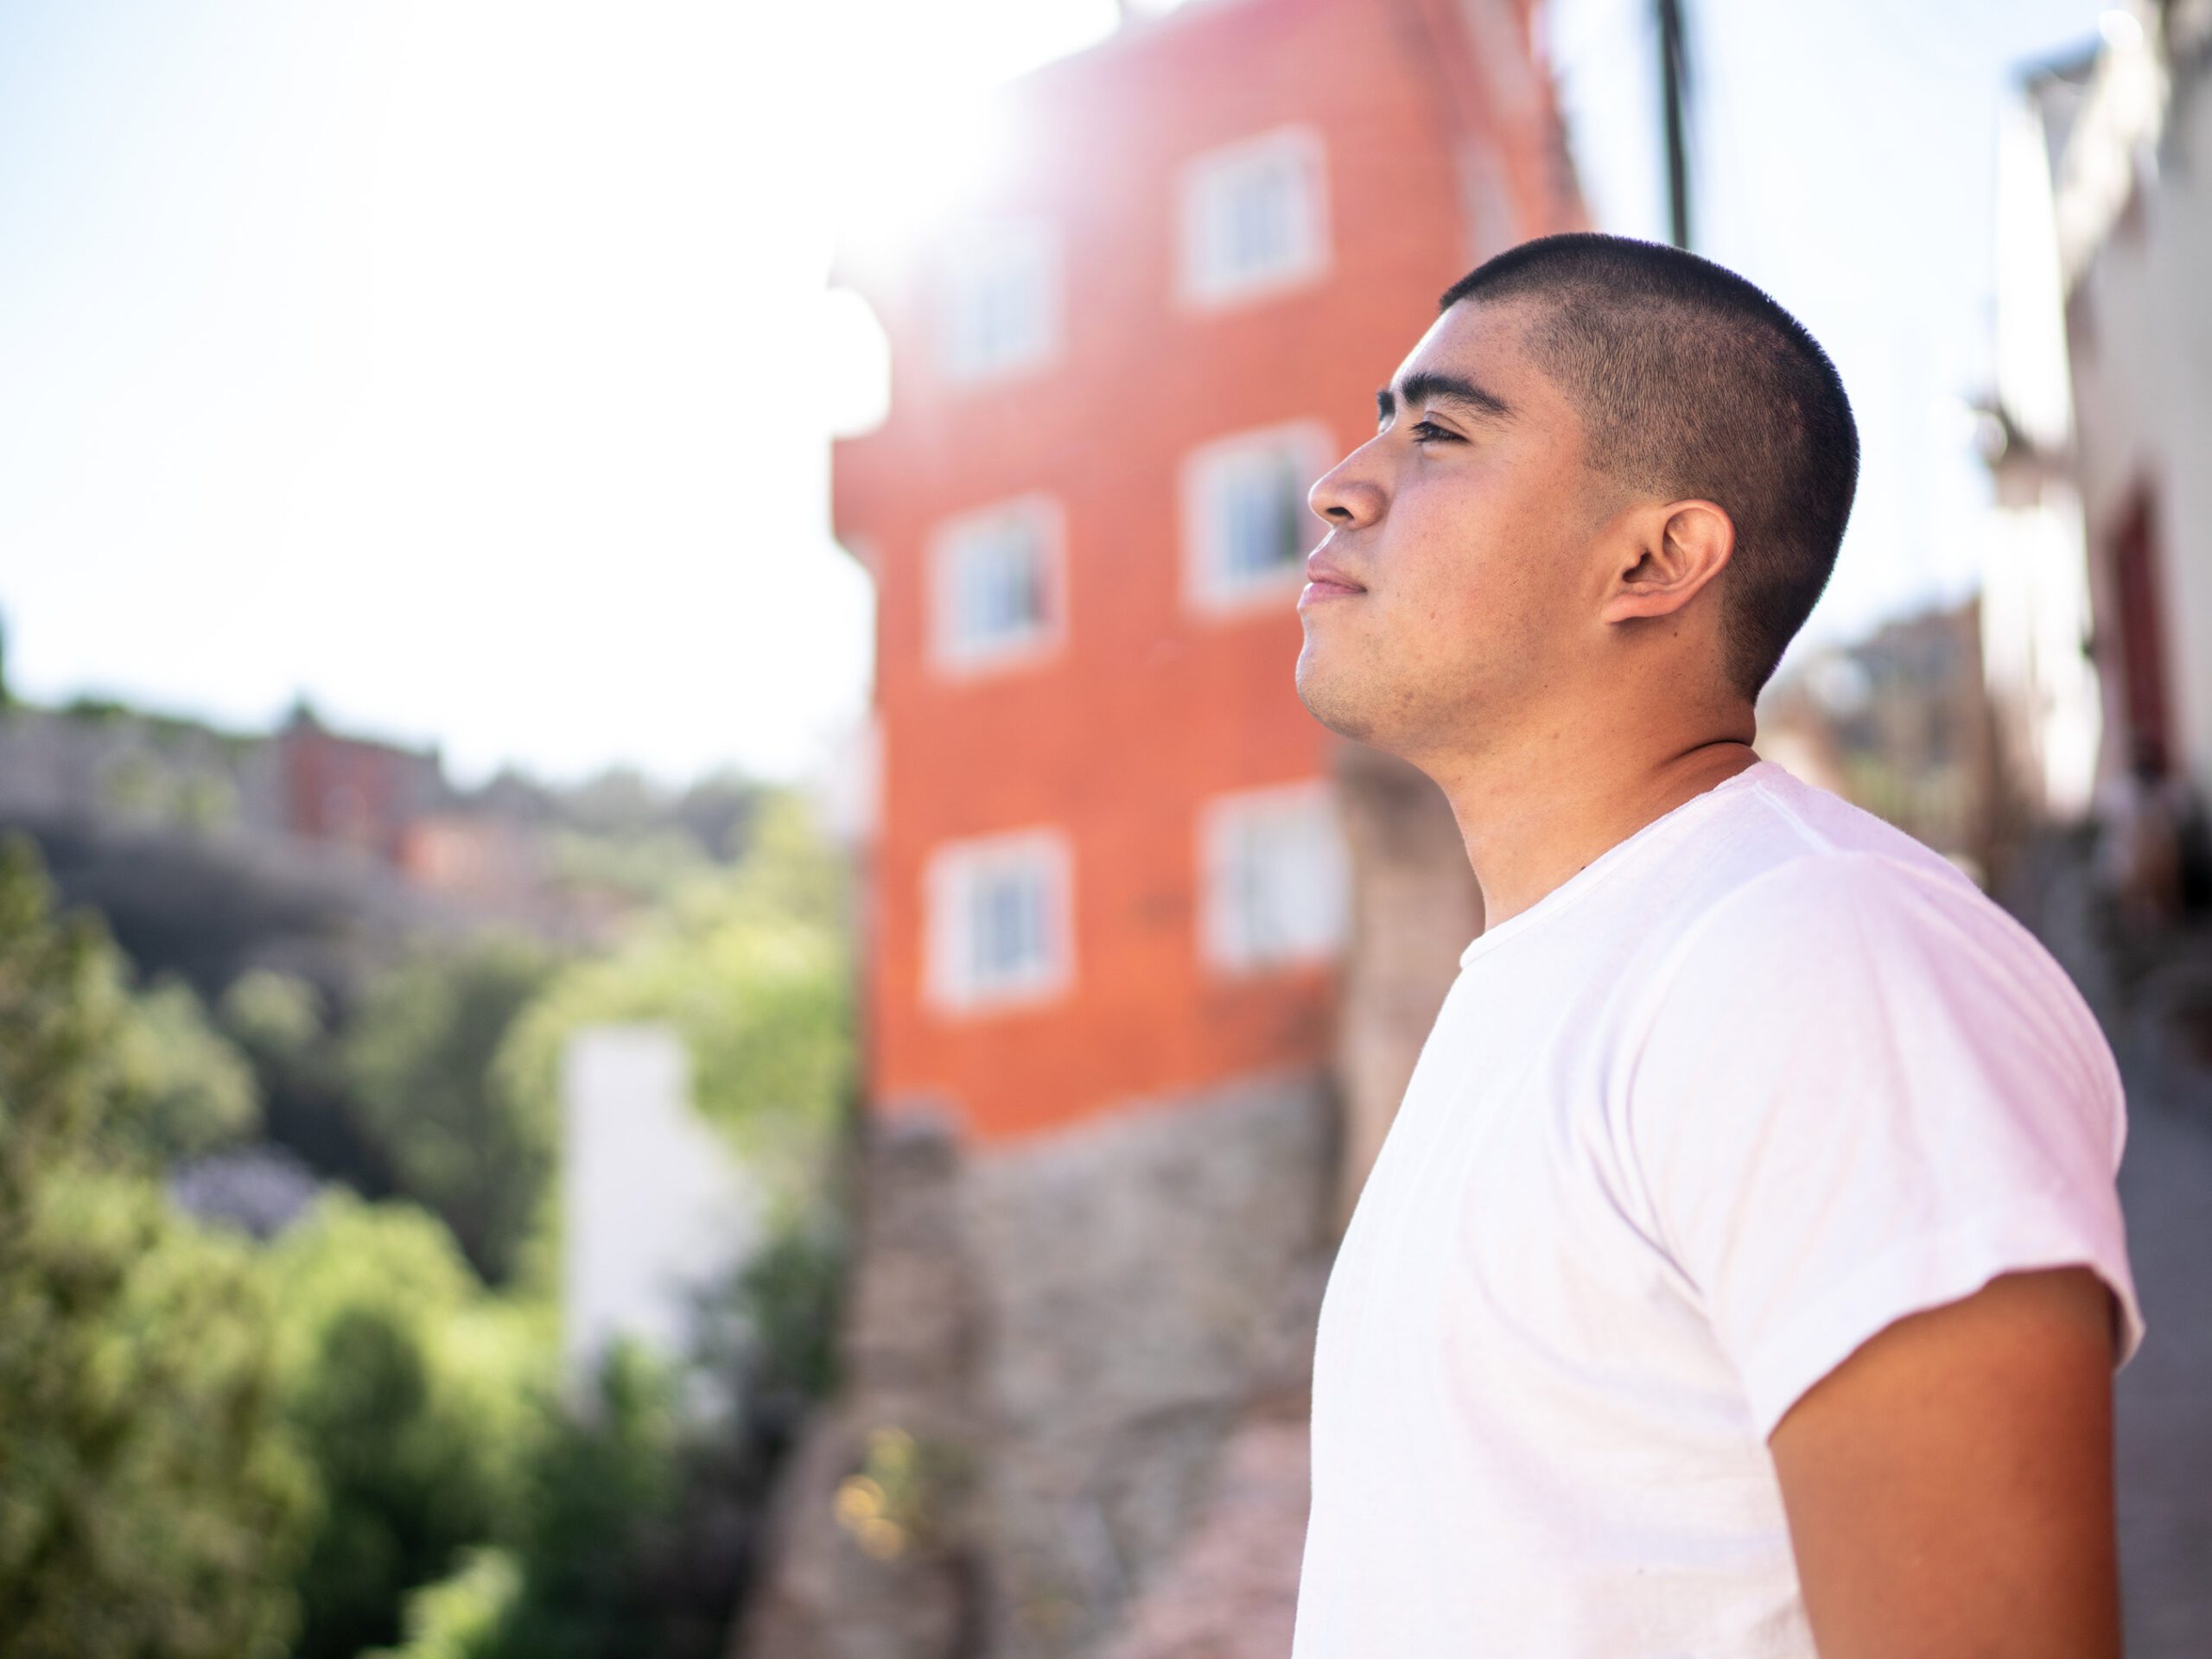 Young hispanic man outdoors with sun shining looking away contemplating